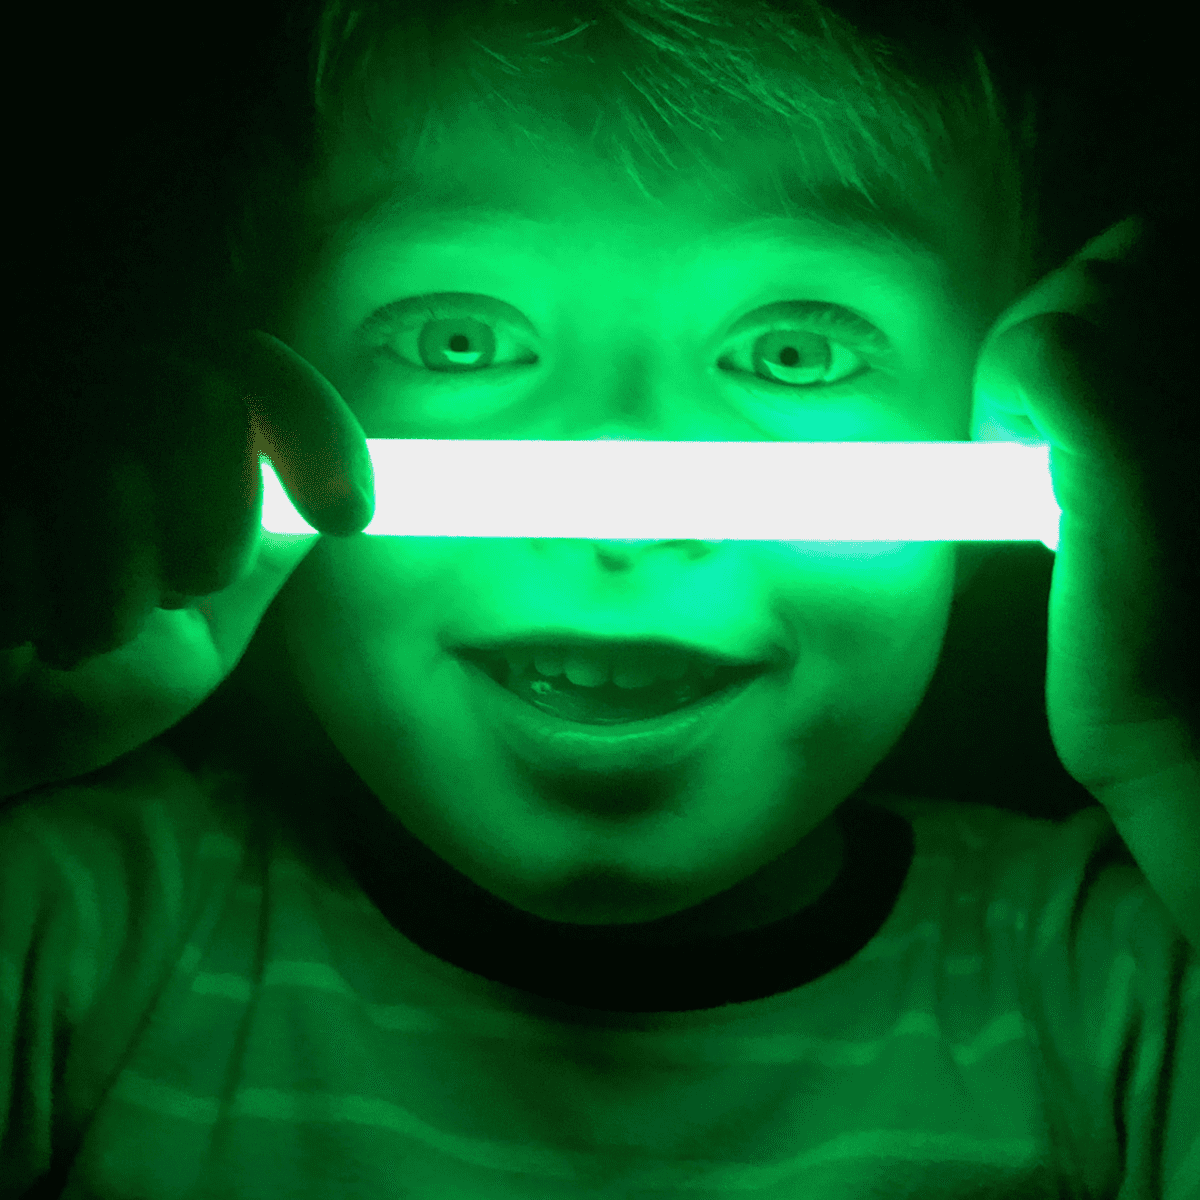 Glow In The Dark Paint 4oz Glo Green